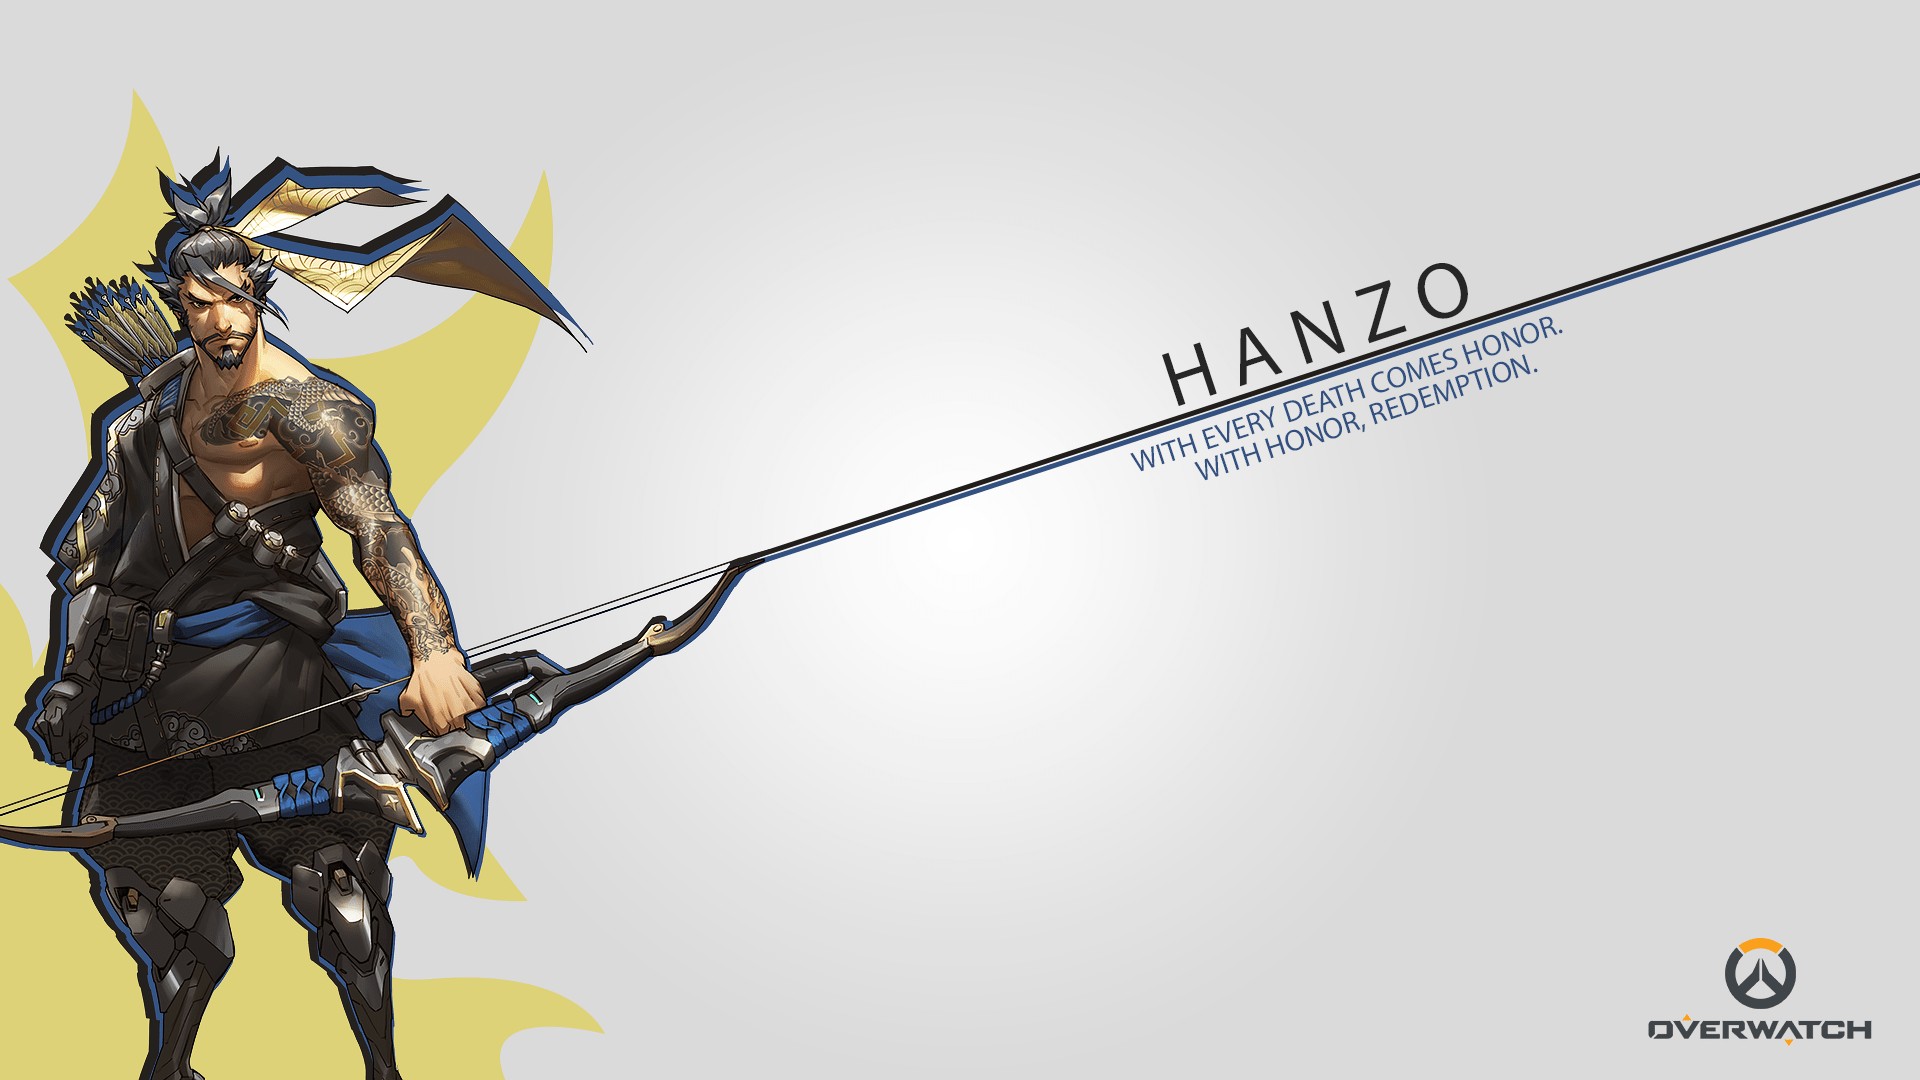 Overwatch Hanzo wallpaper ·① Download free amazing ...